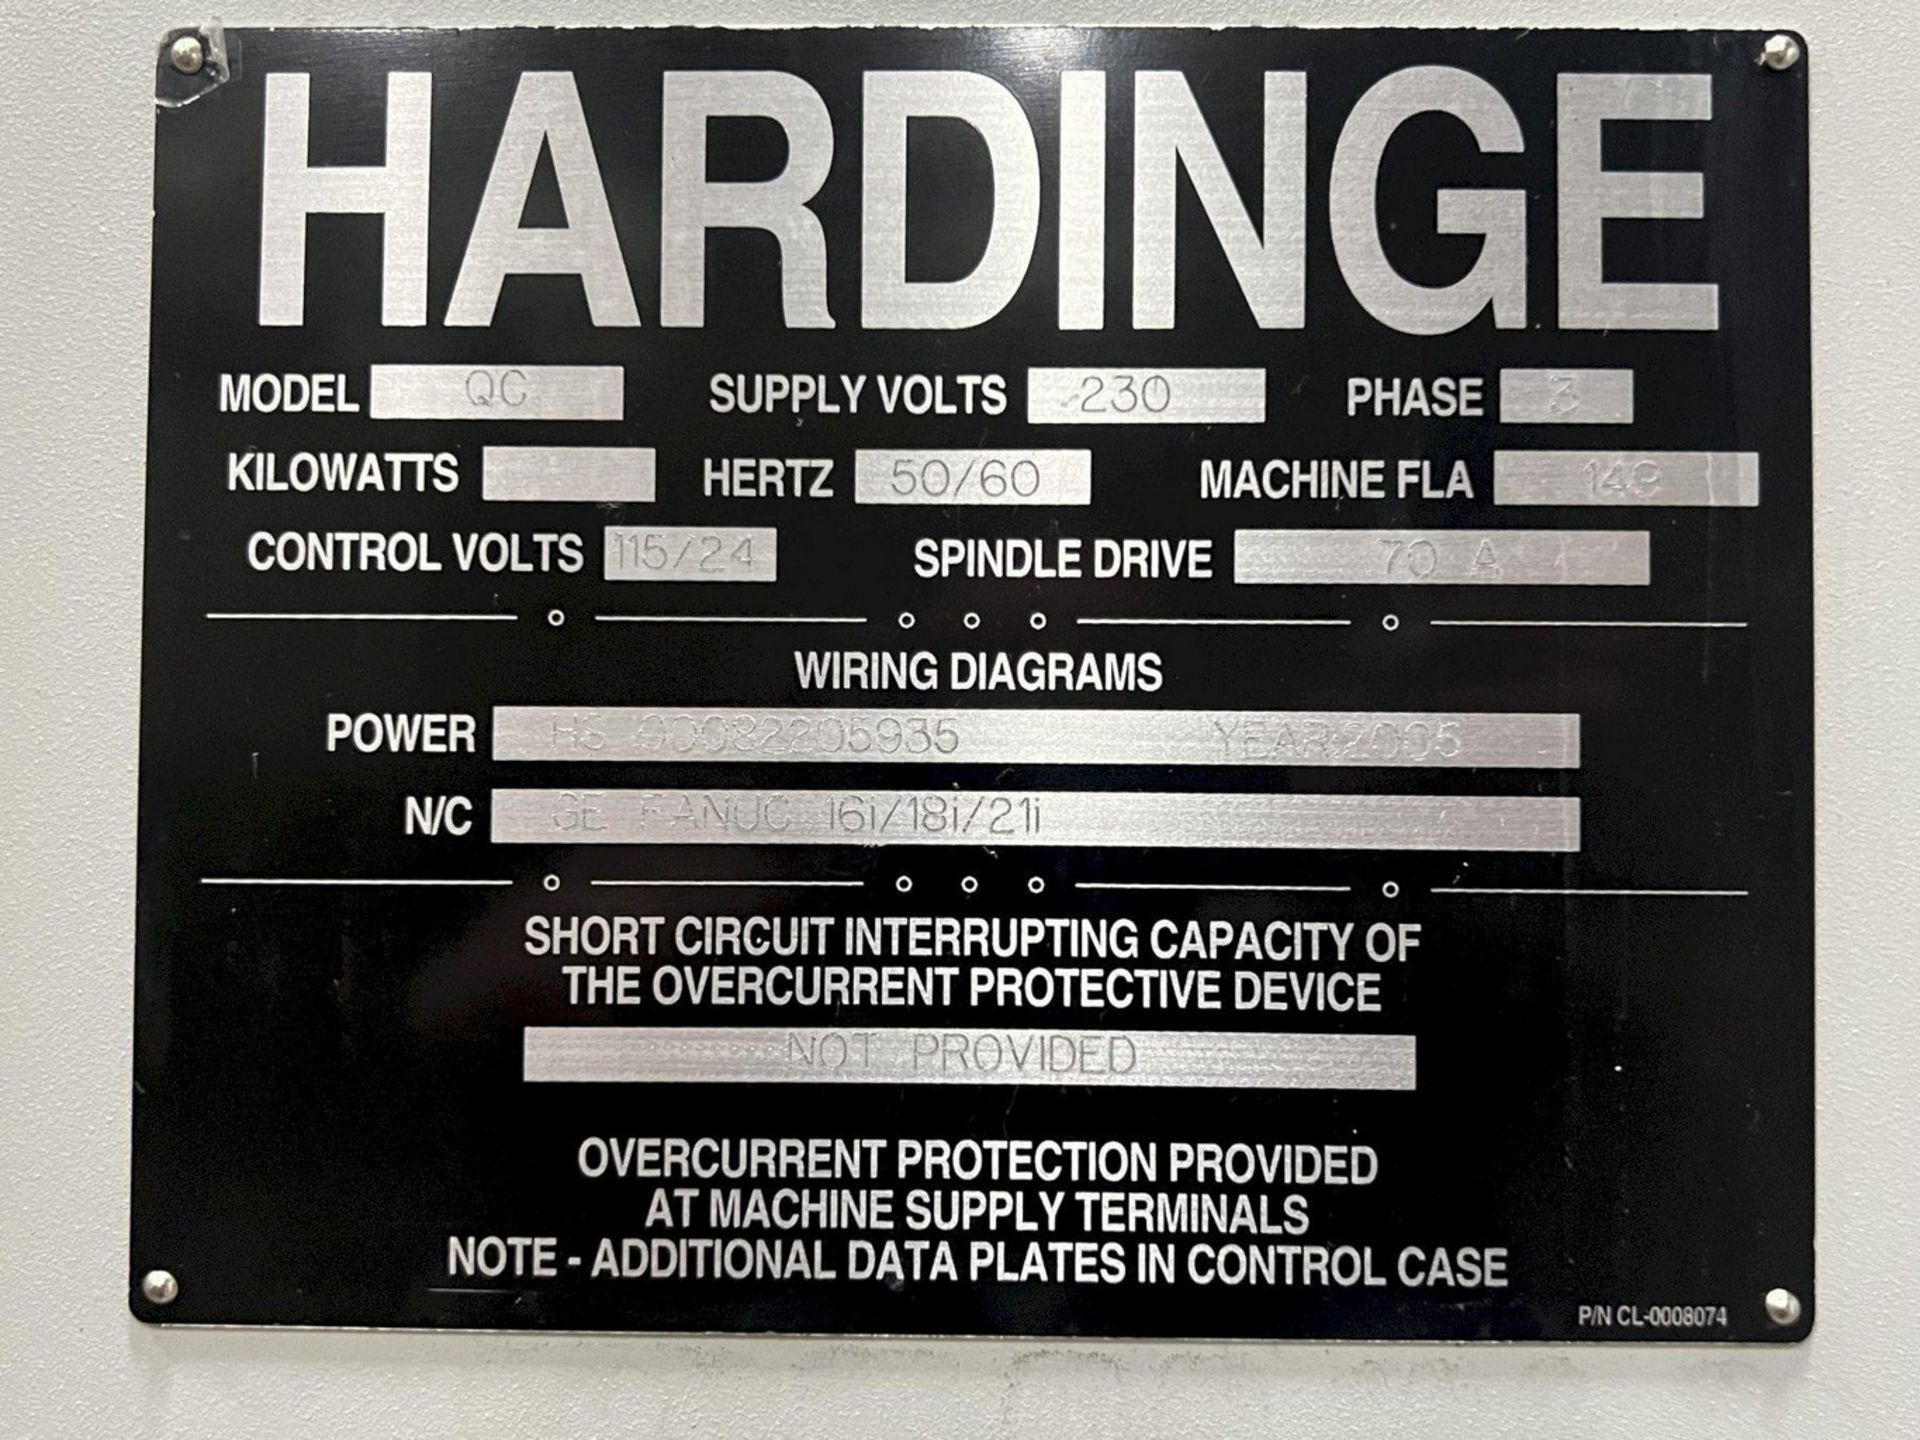 Hardinge Quest 8/51 CNC Lathe with Live Milling, S/N QC-556 - Image 14 of 17